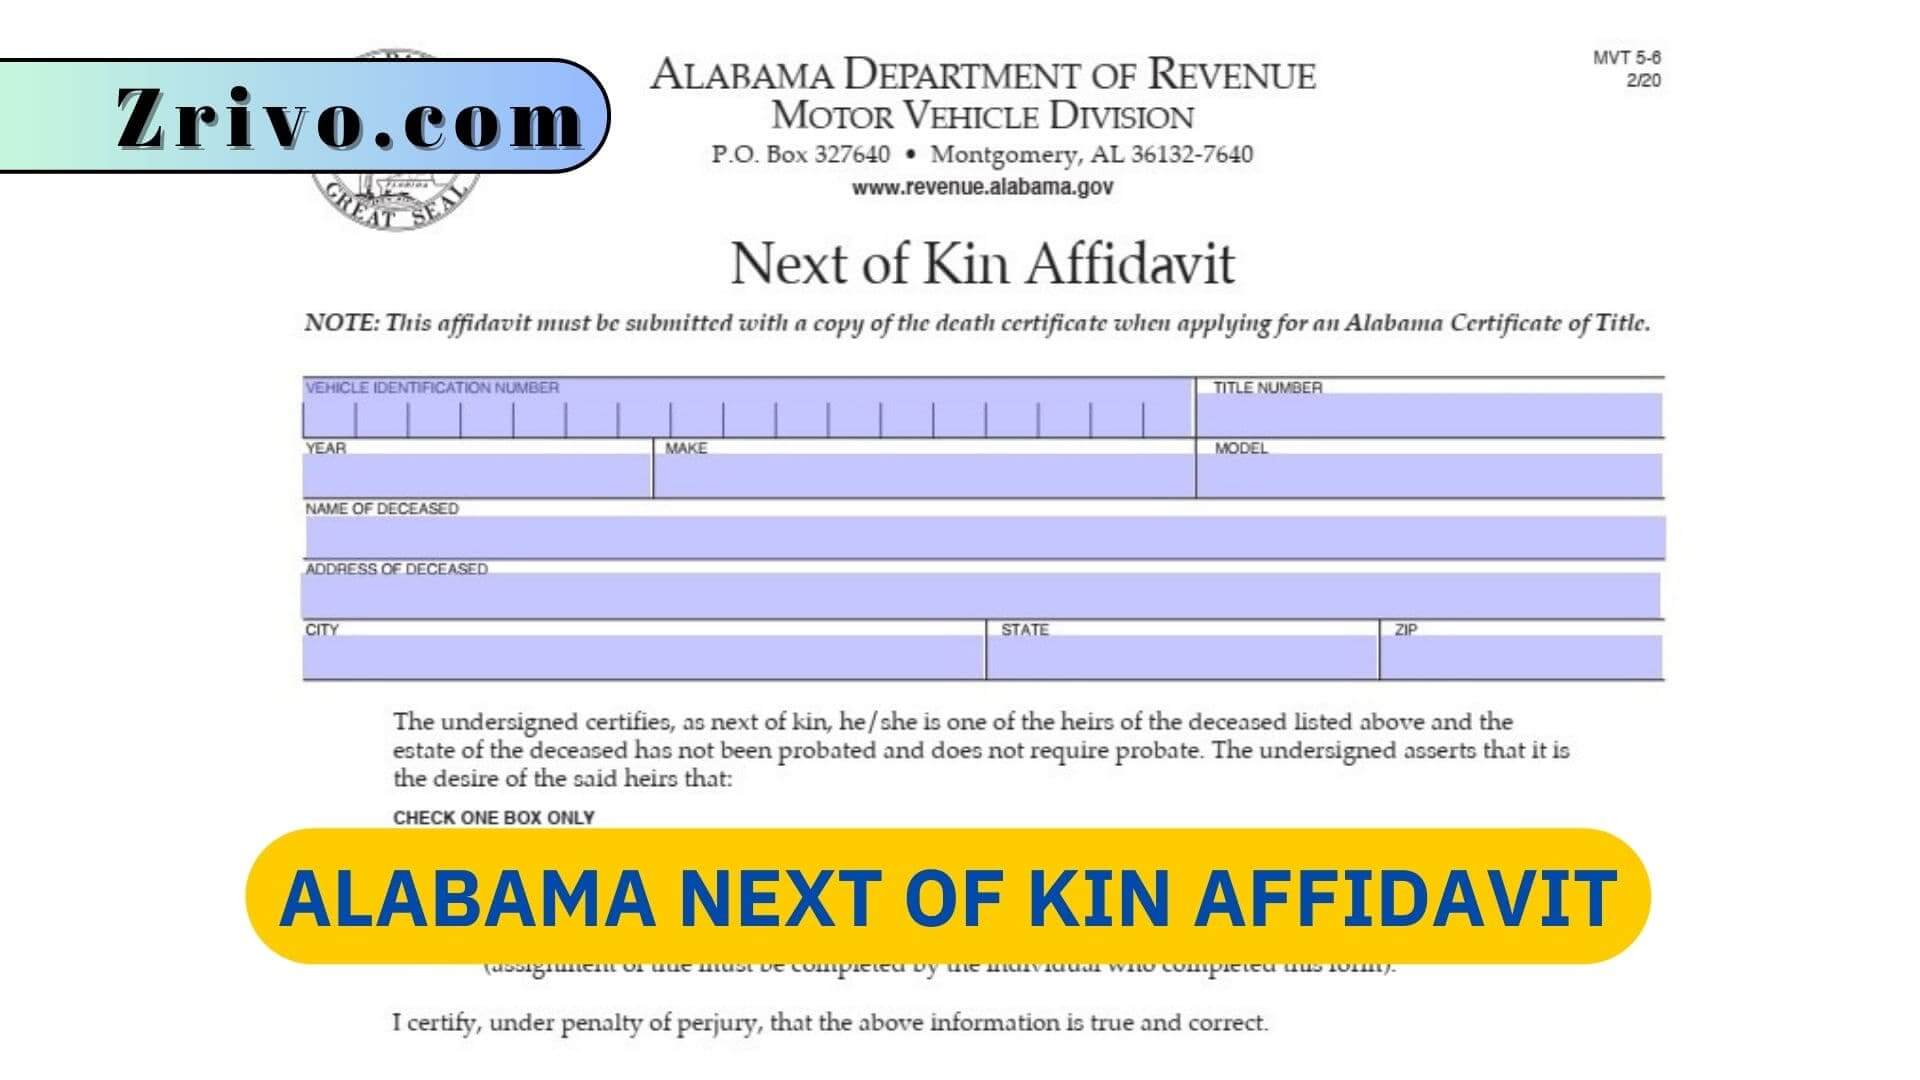 Alabama Next of Kin Affidavit